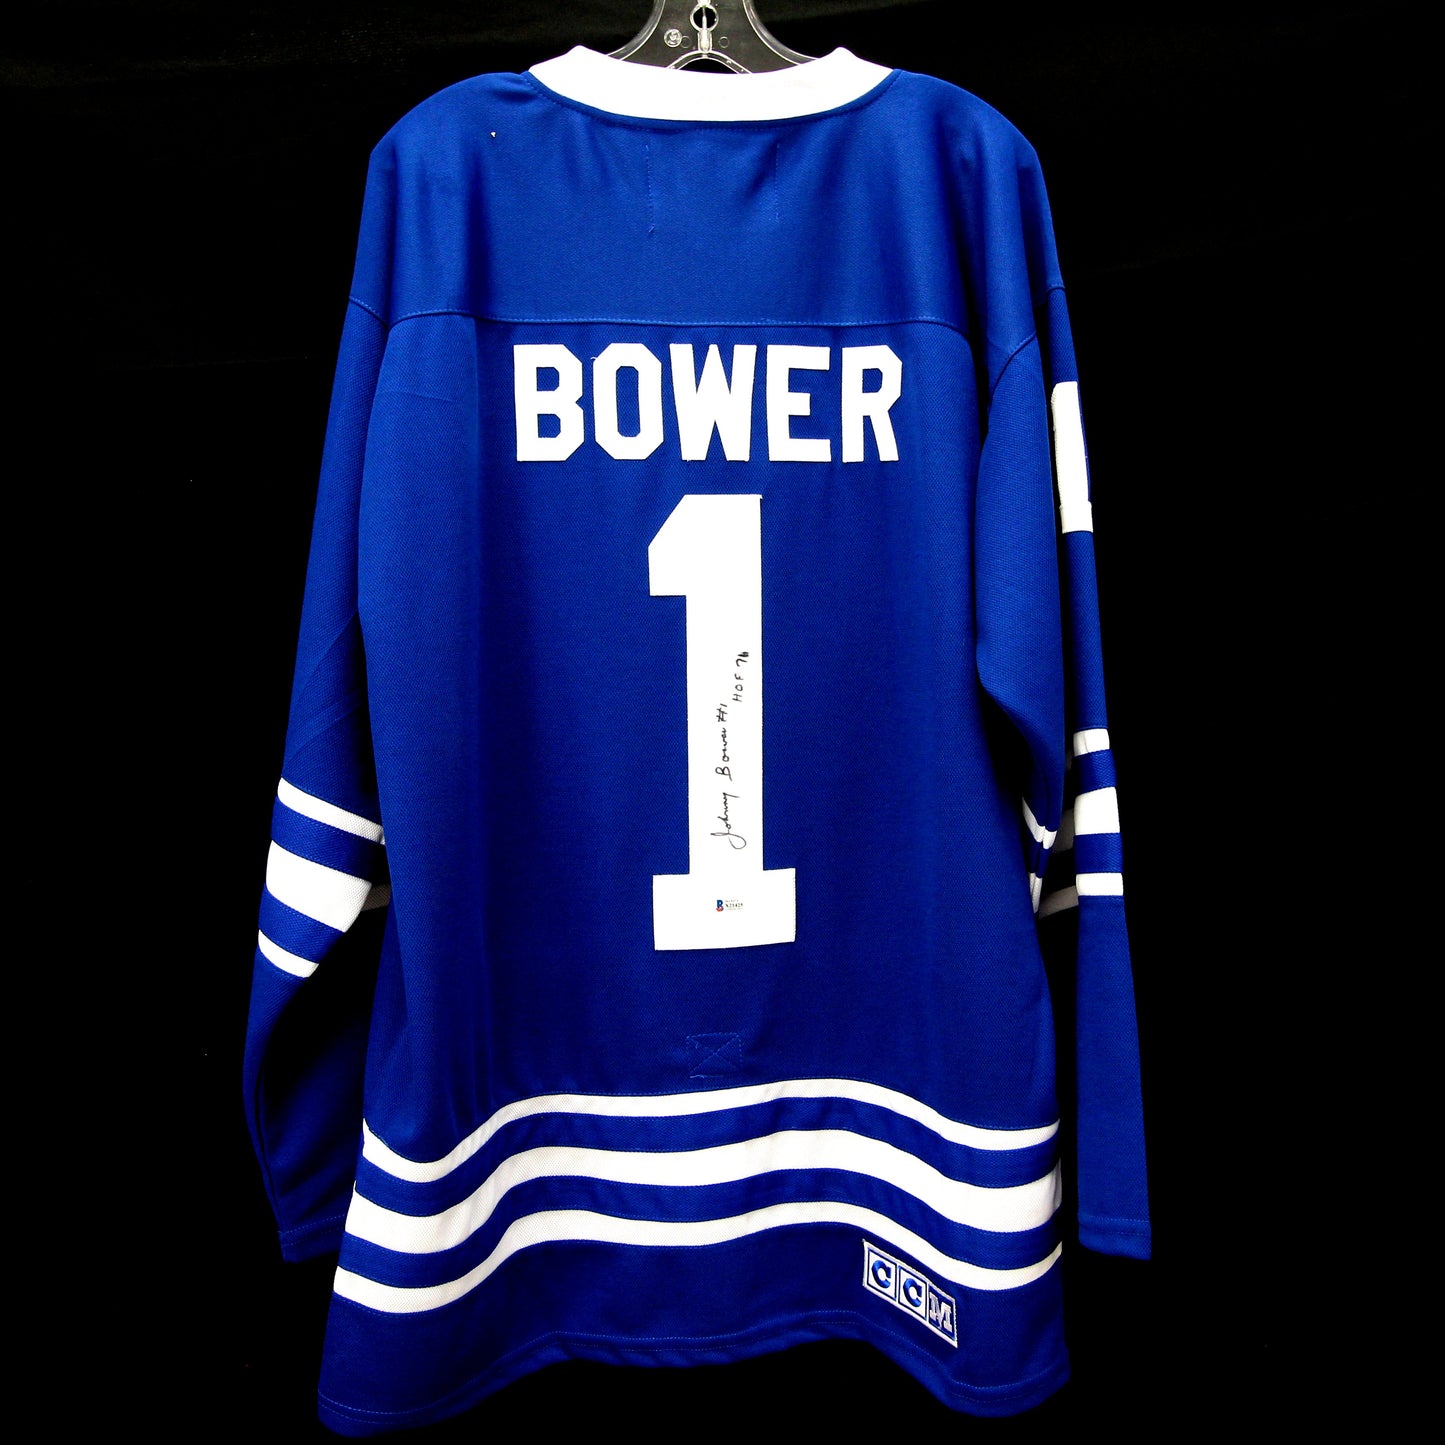 Johnny Bower - Maple Leafs - Autographed Jersey / Chandail autographié X21425